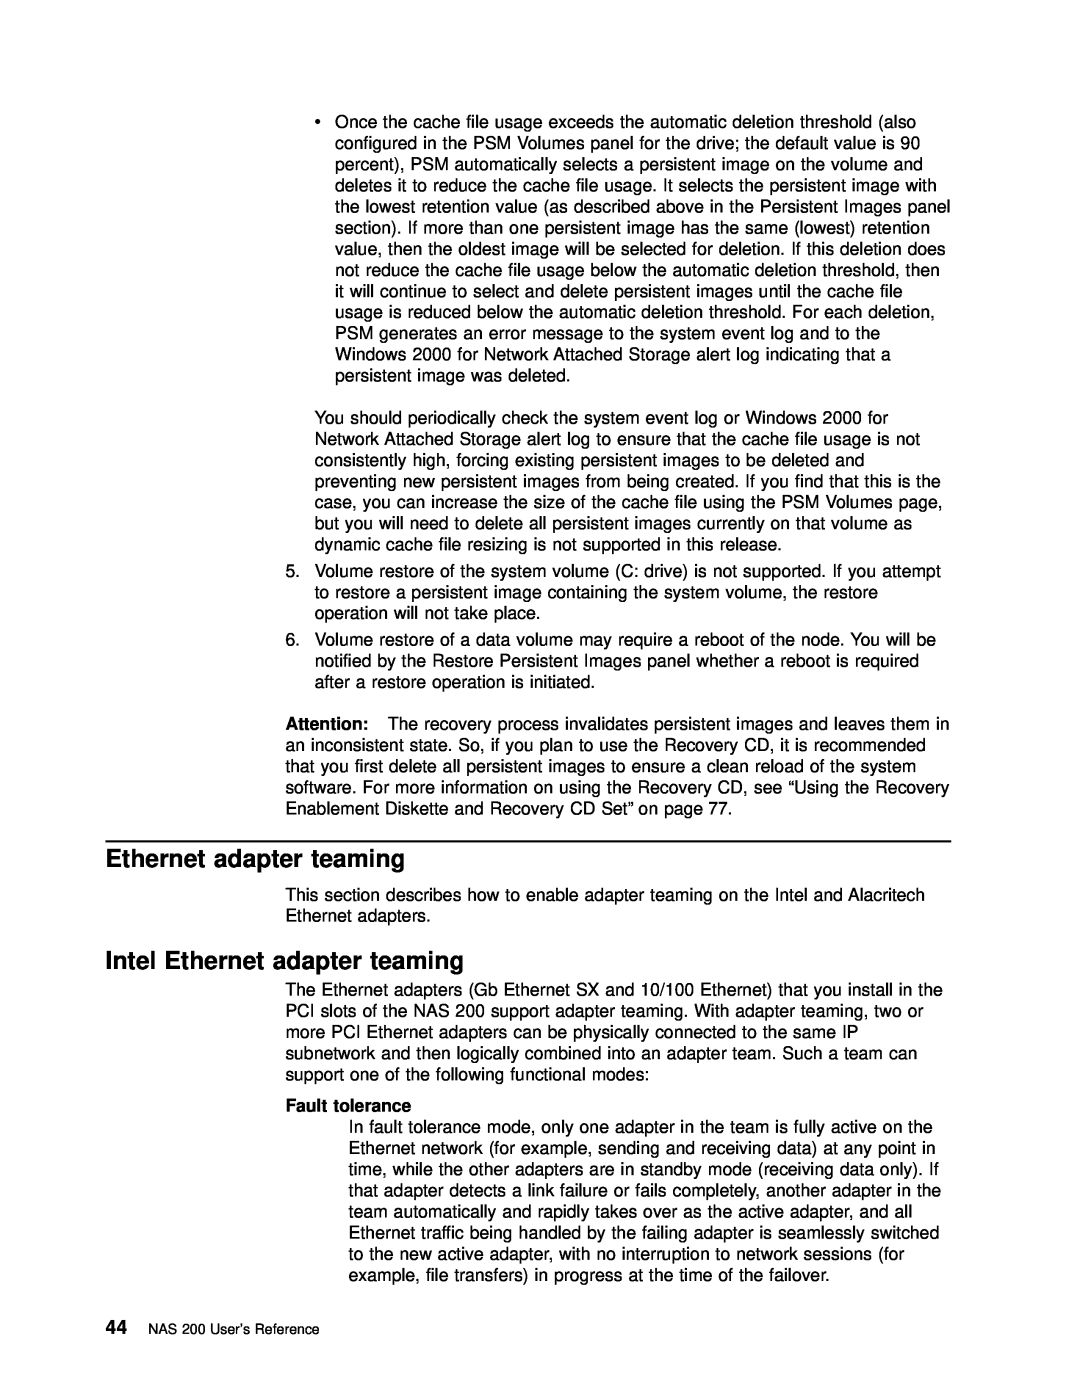 IBM 201 manual Intel Ethernet adapter teaming, Fault tolerance 